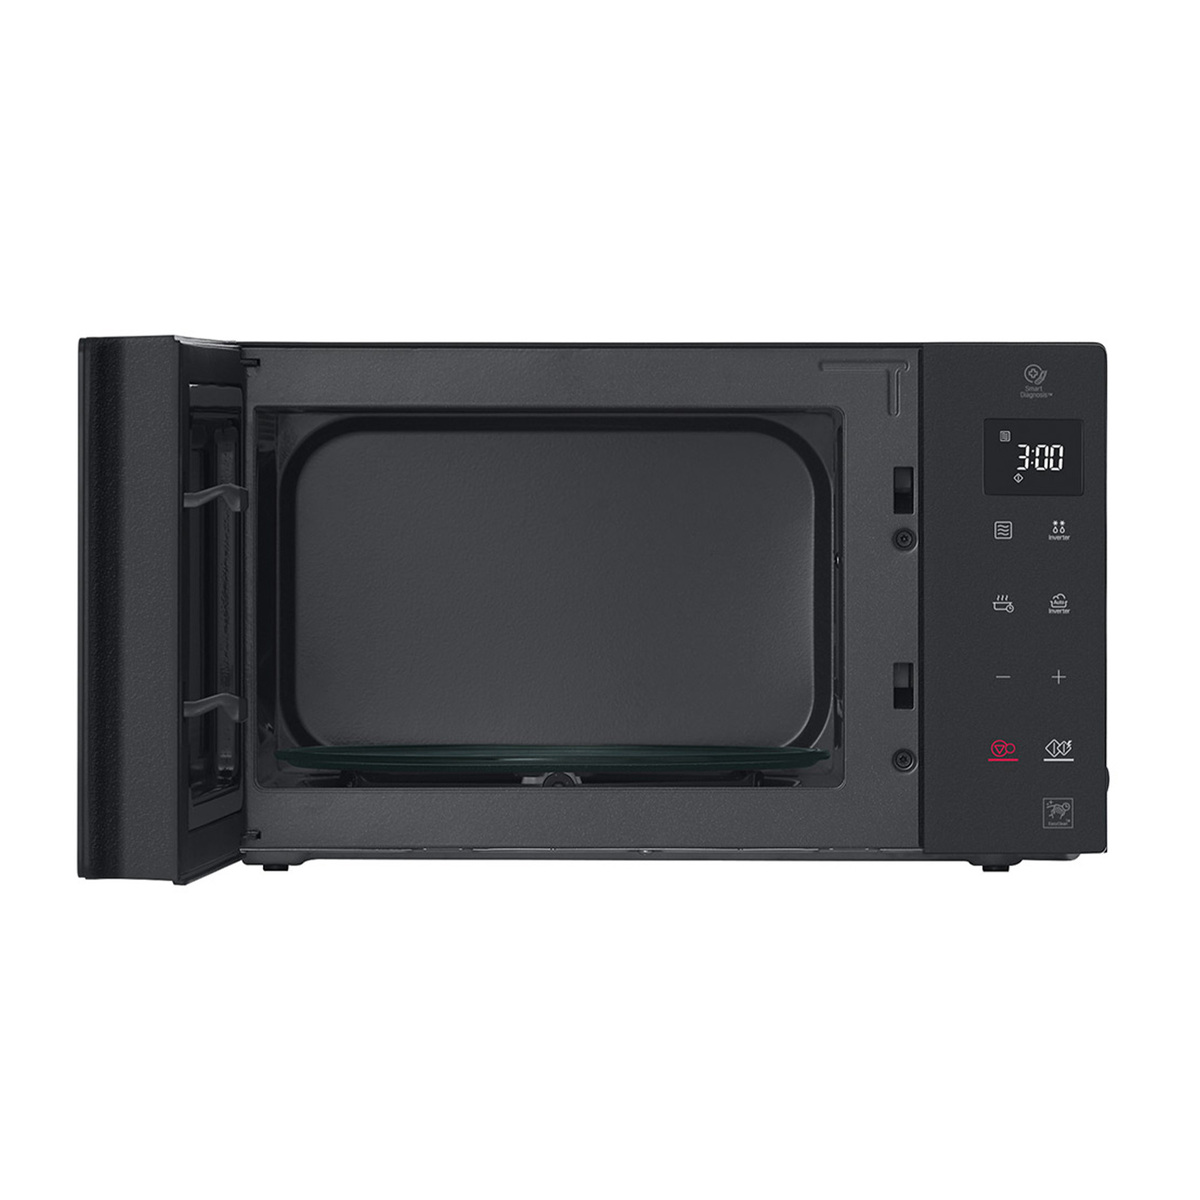 LG Microwave Oven MS2336GIB 23Ltr